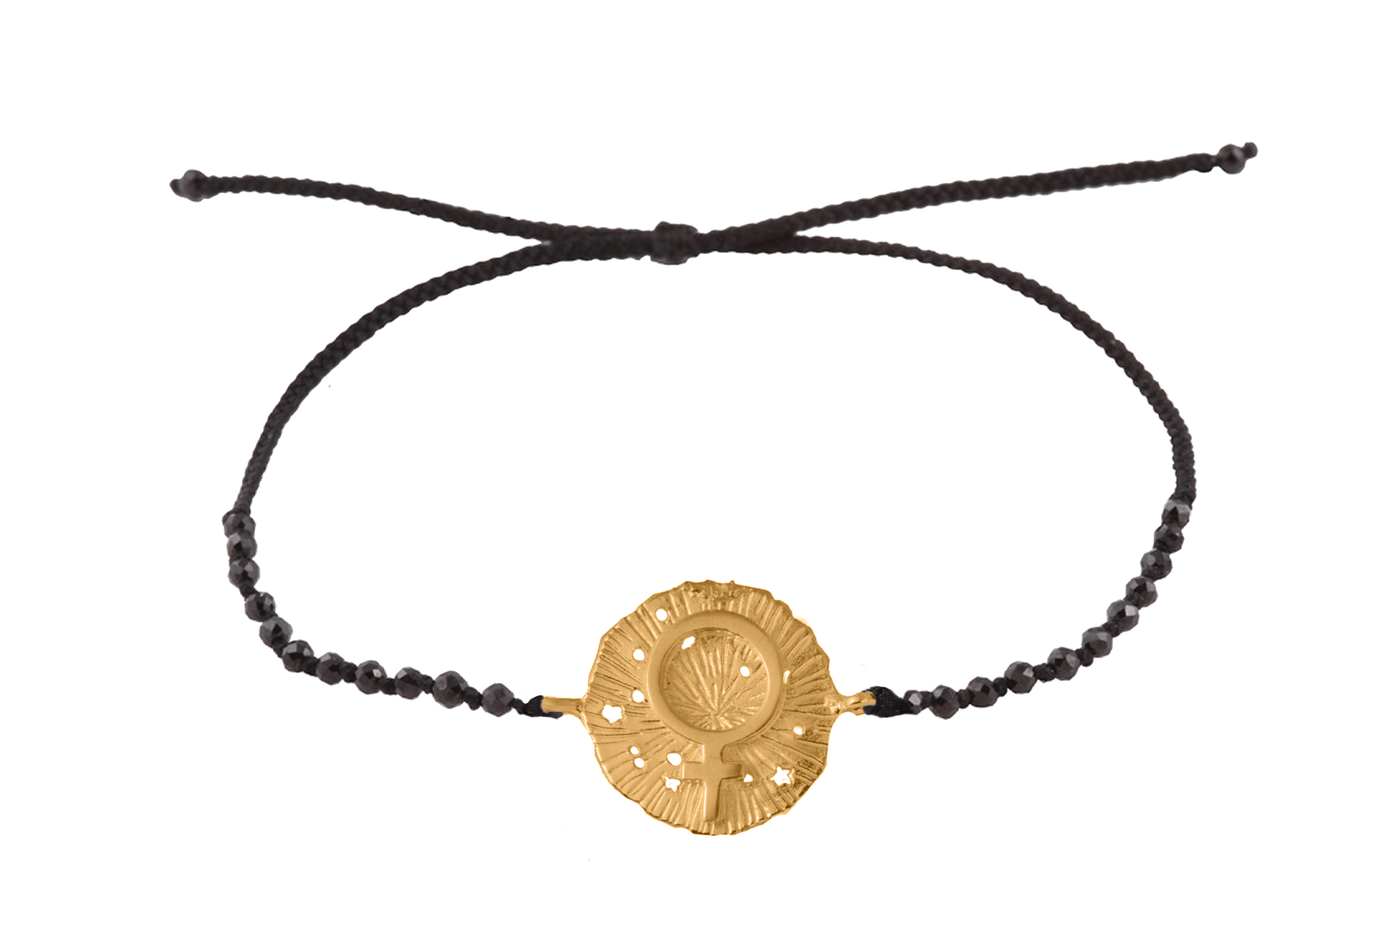 Venus medallion bracelet with semiprecious stone beads. Silver, gold-plated